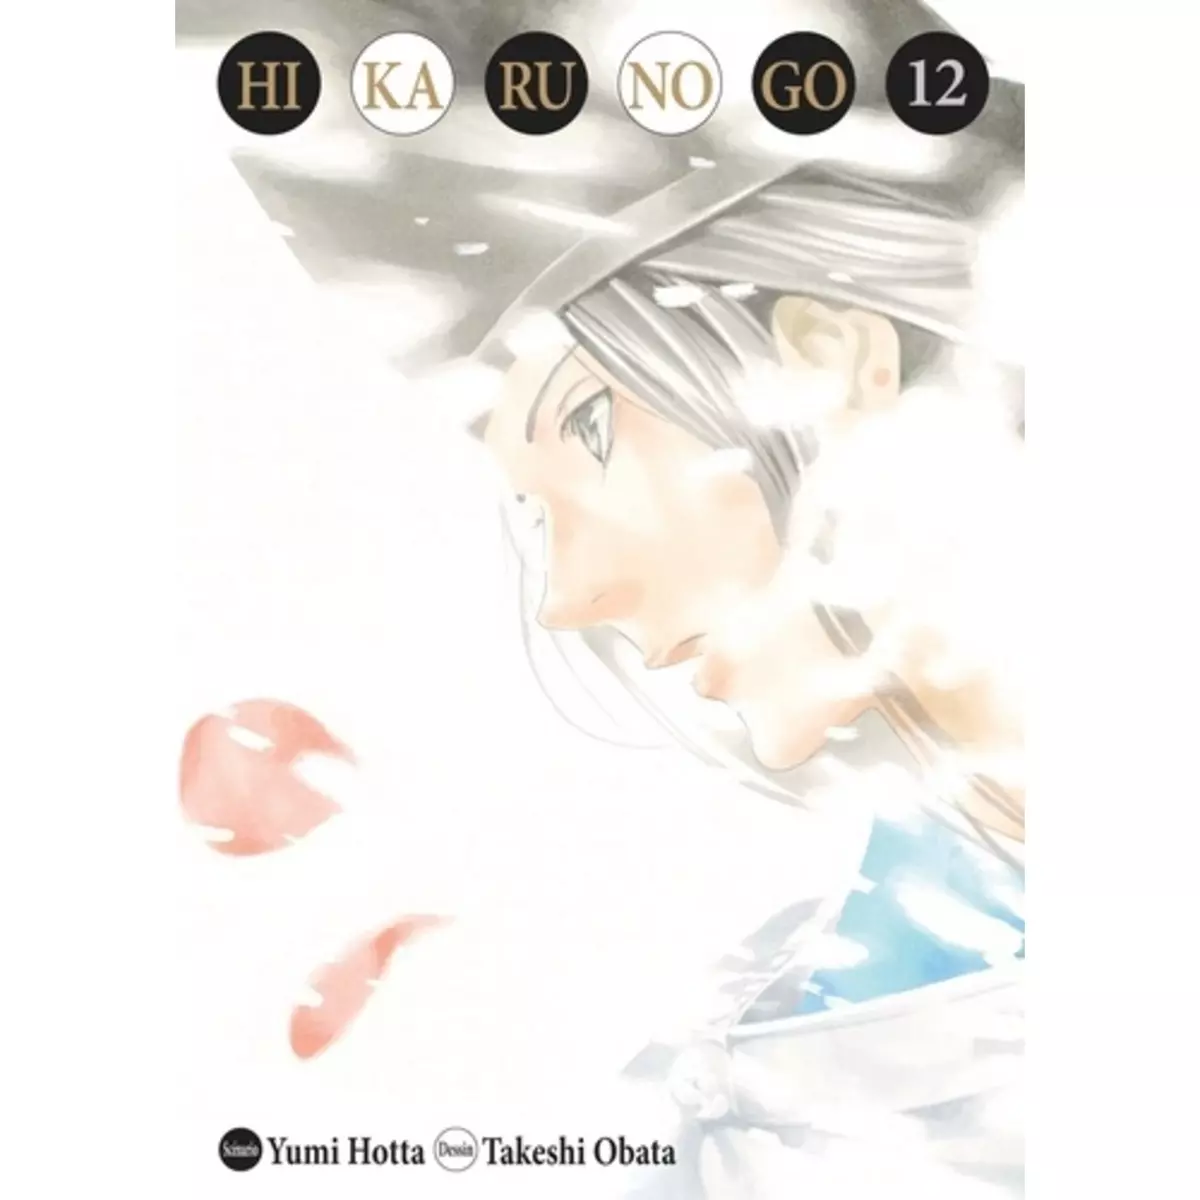  HIKARU NO GO TOME 12 . EDITION DE LUXE, Hotta Yumi